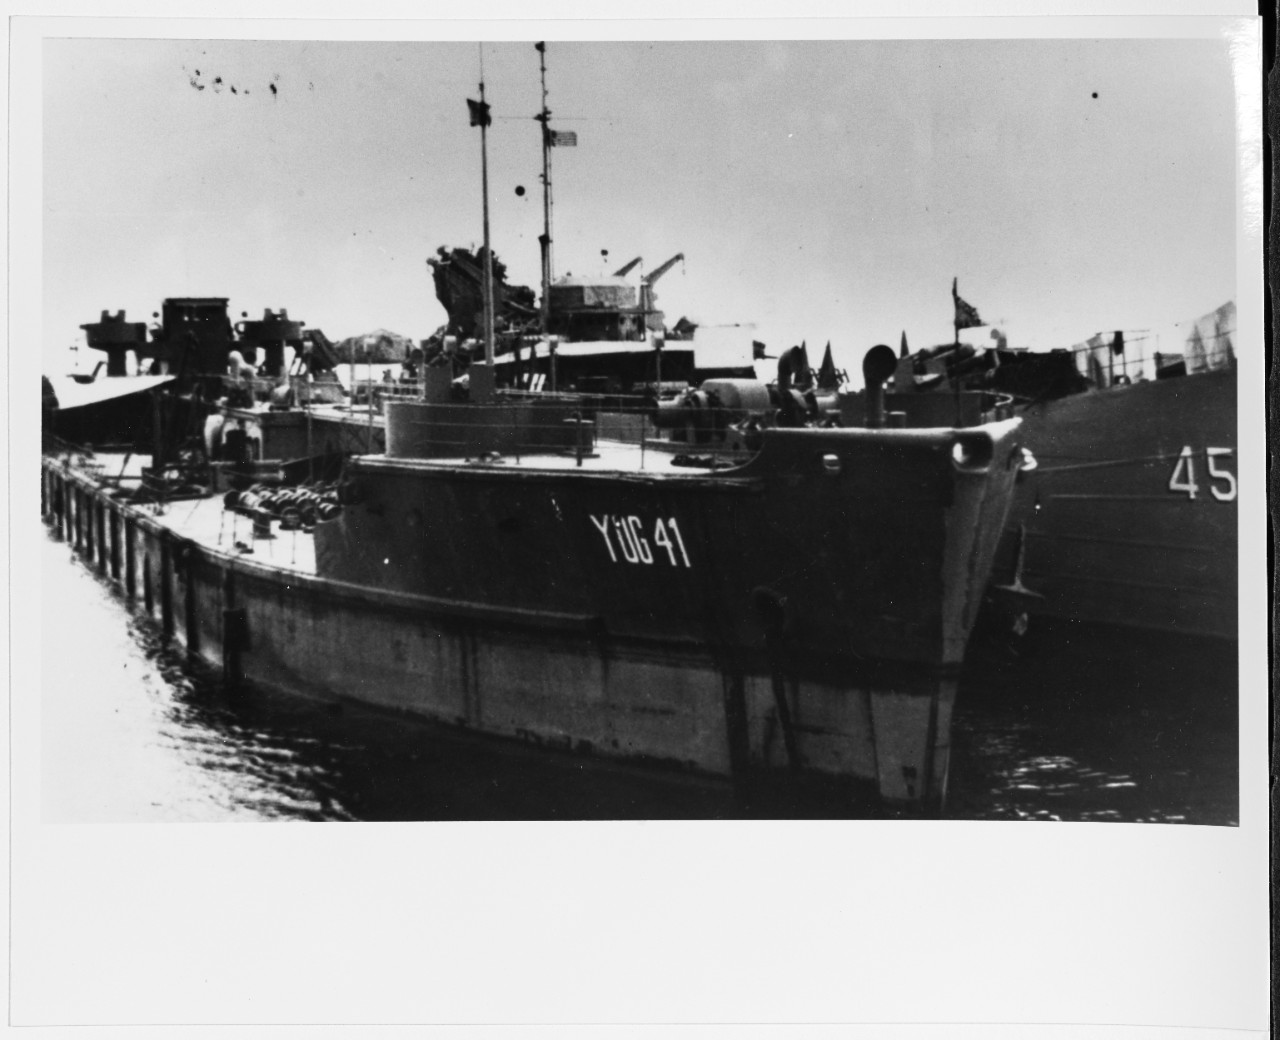 USS YOG-41